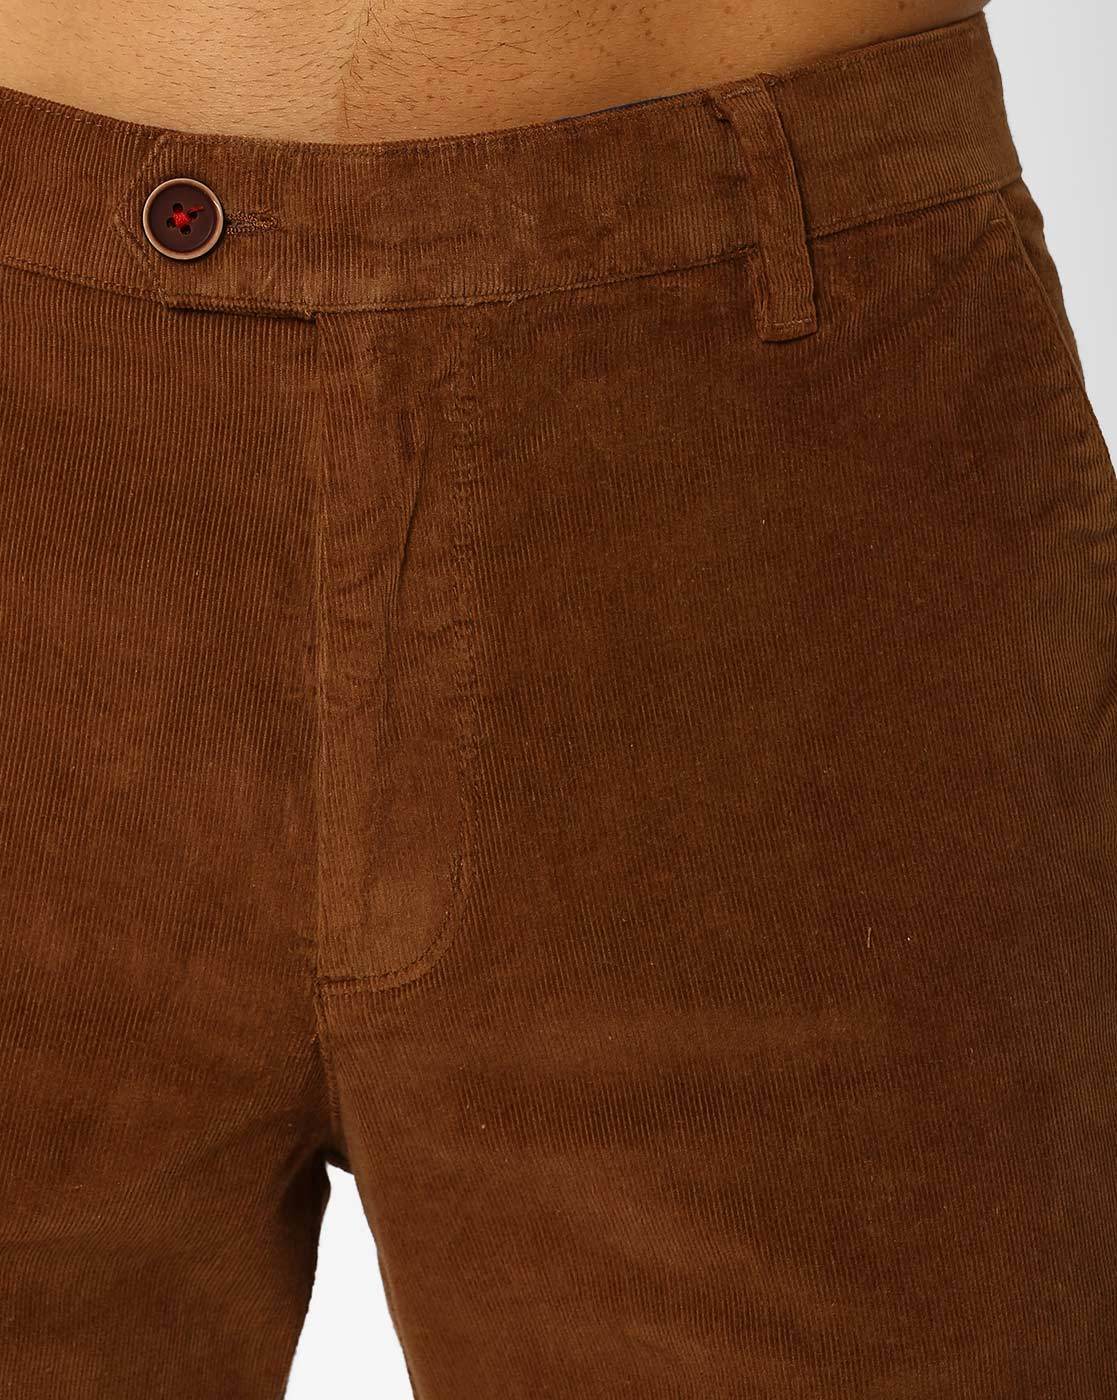 125 oz 8 Wale Corduroy Trousers  Brown  Suit Pants Style  Bronson